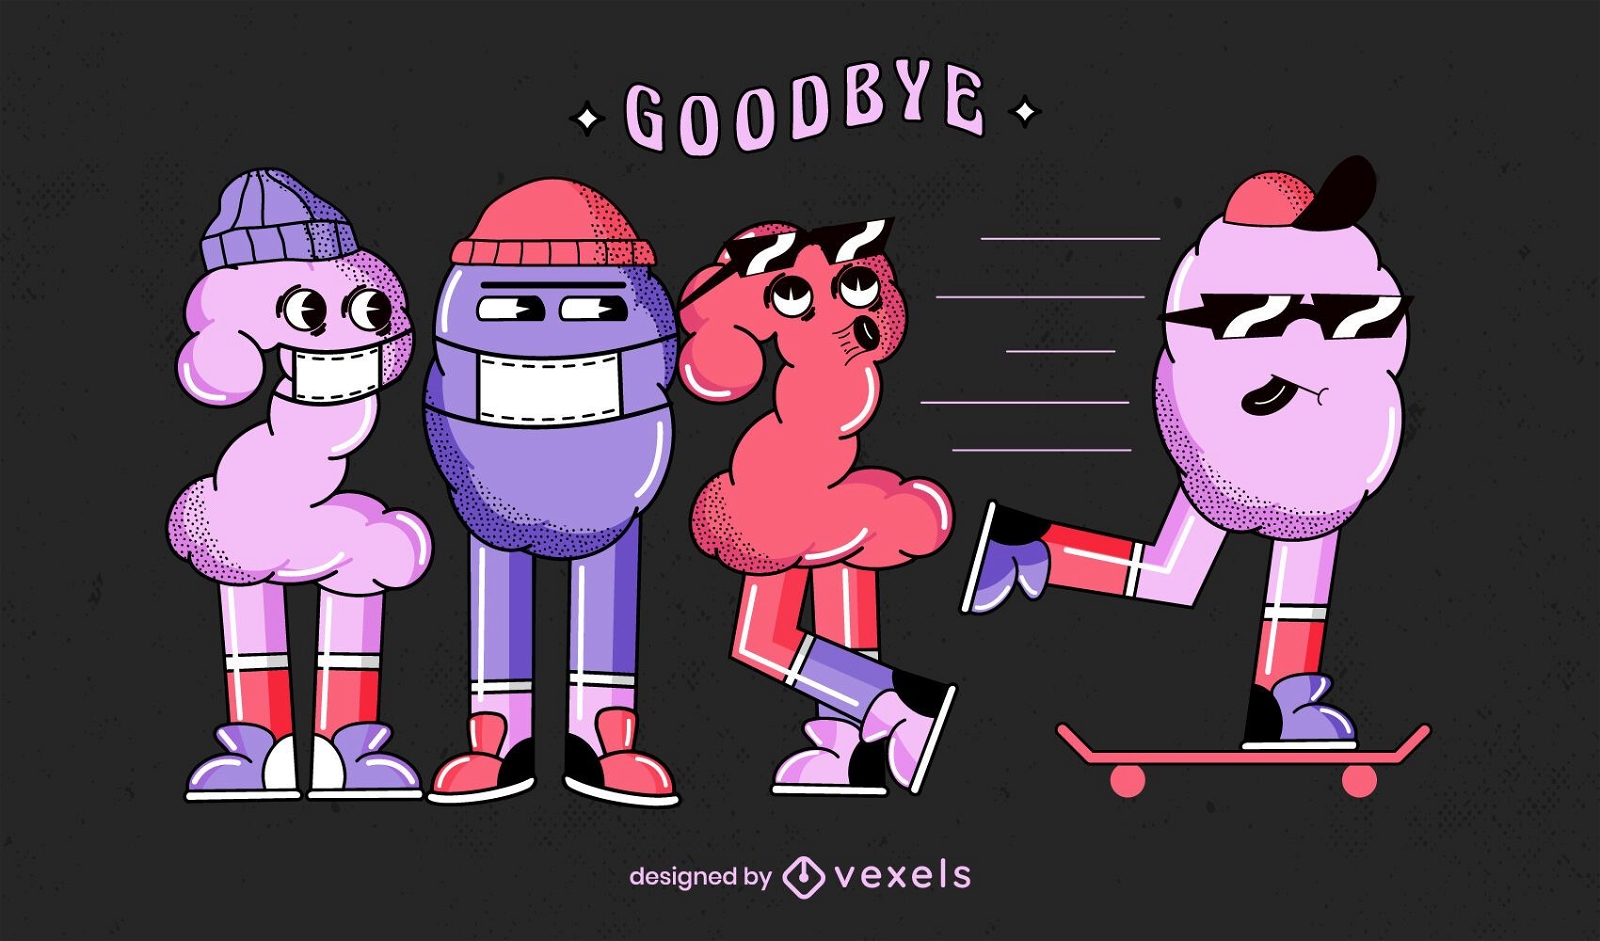 Goodbye 2020 illustration design